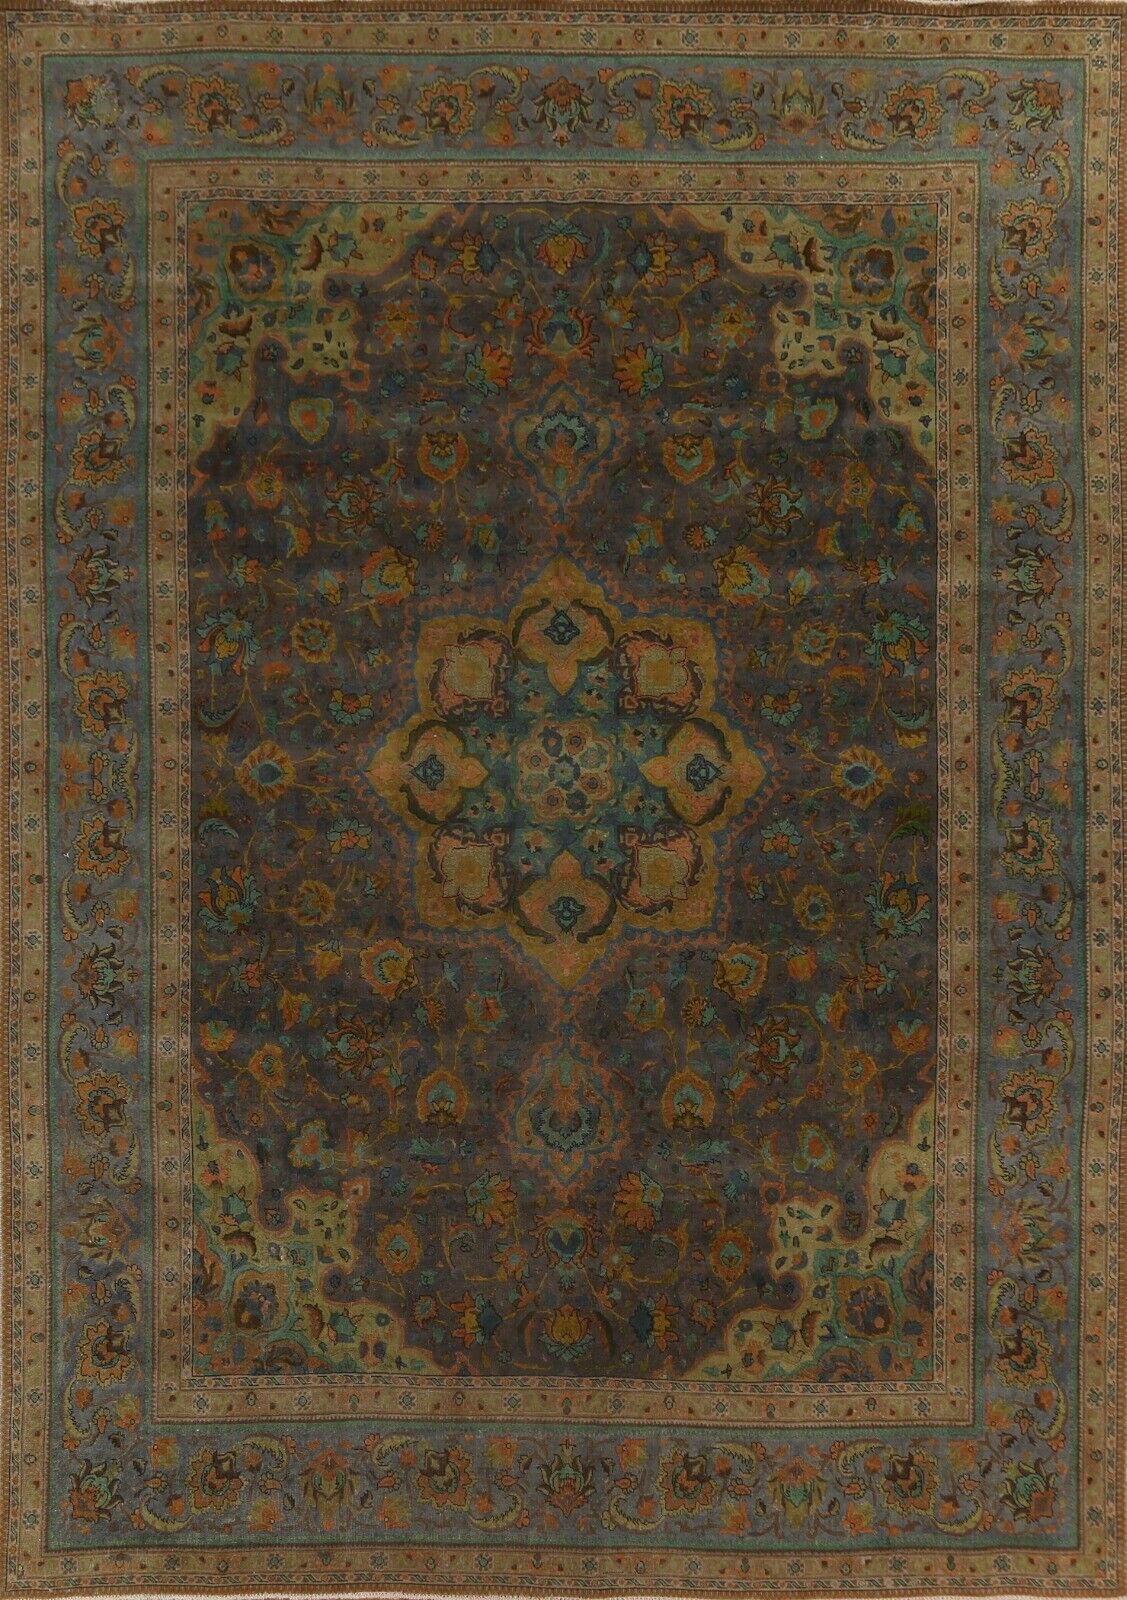 Vintage Overdyed Tebriz Floral 10x13 Area Rug Hand-knotted Low Pile Wool Carpet